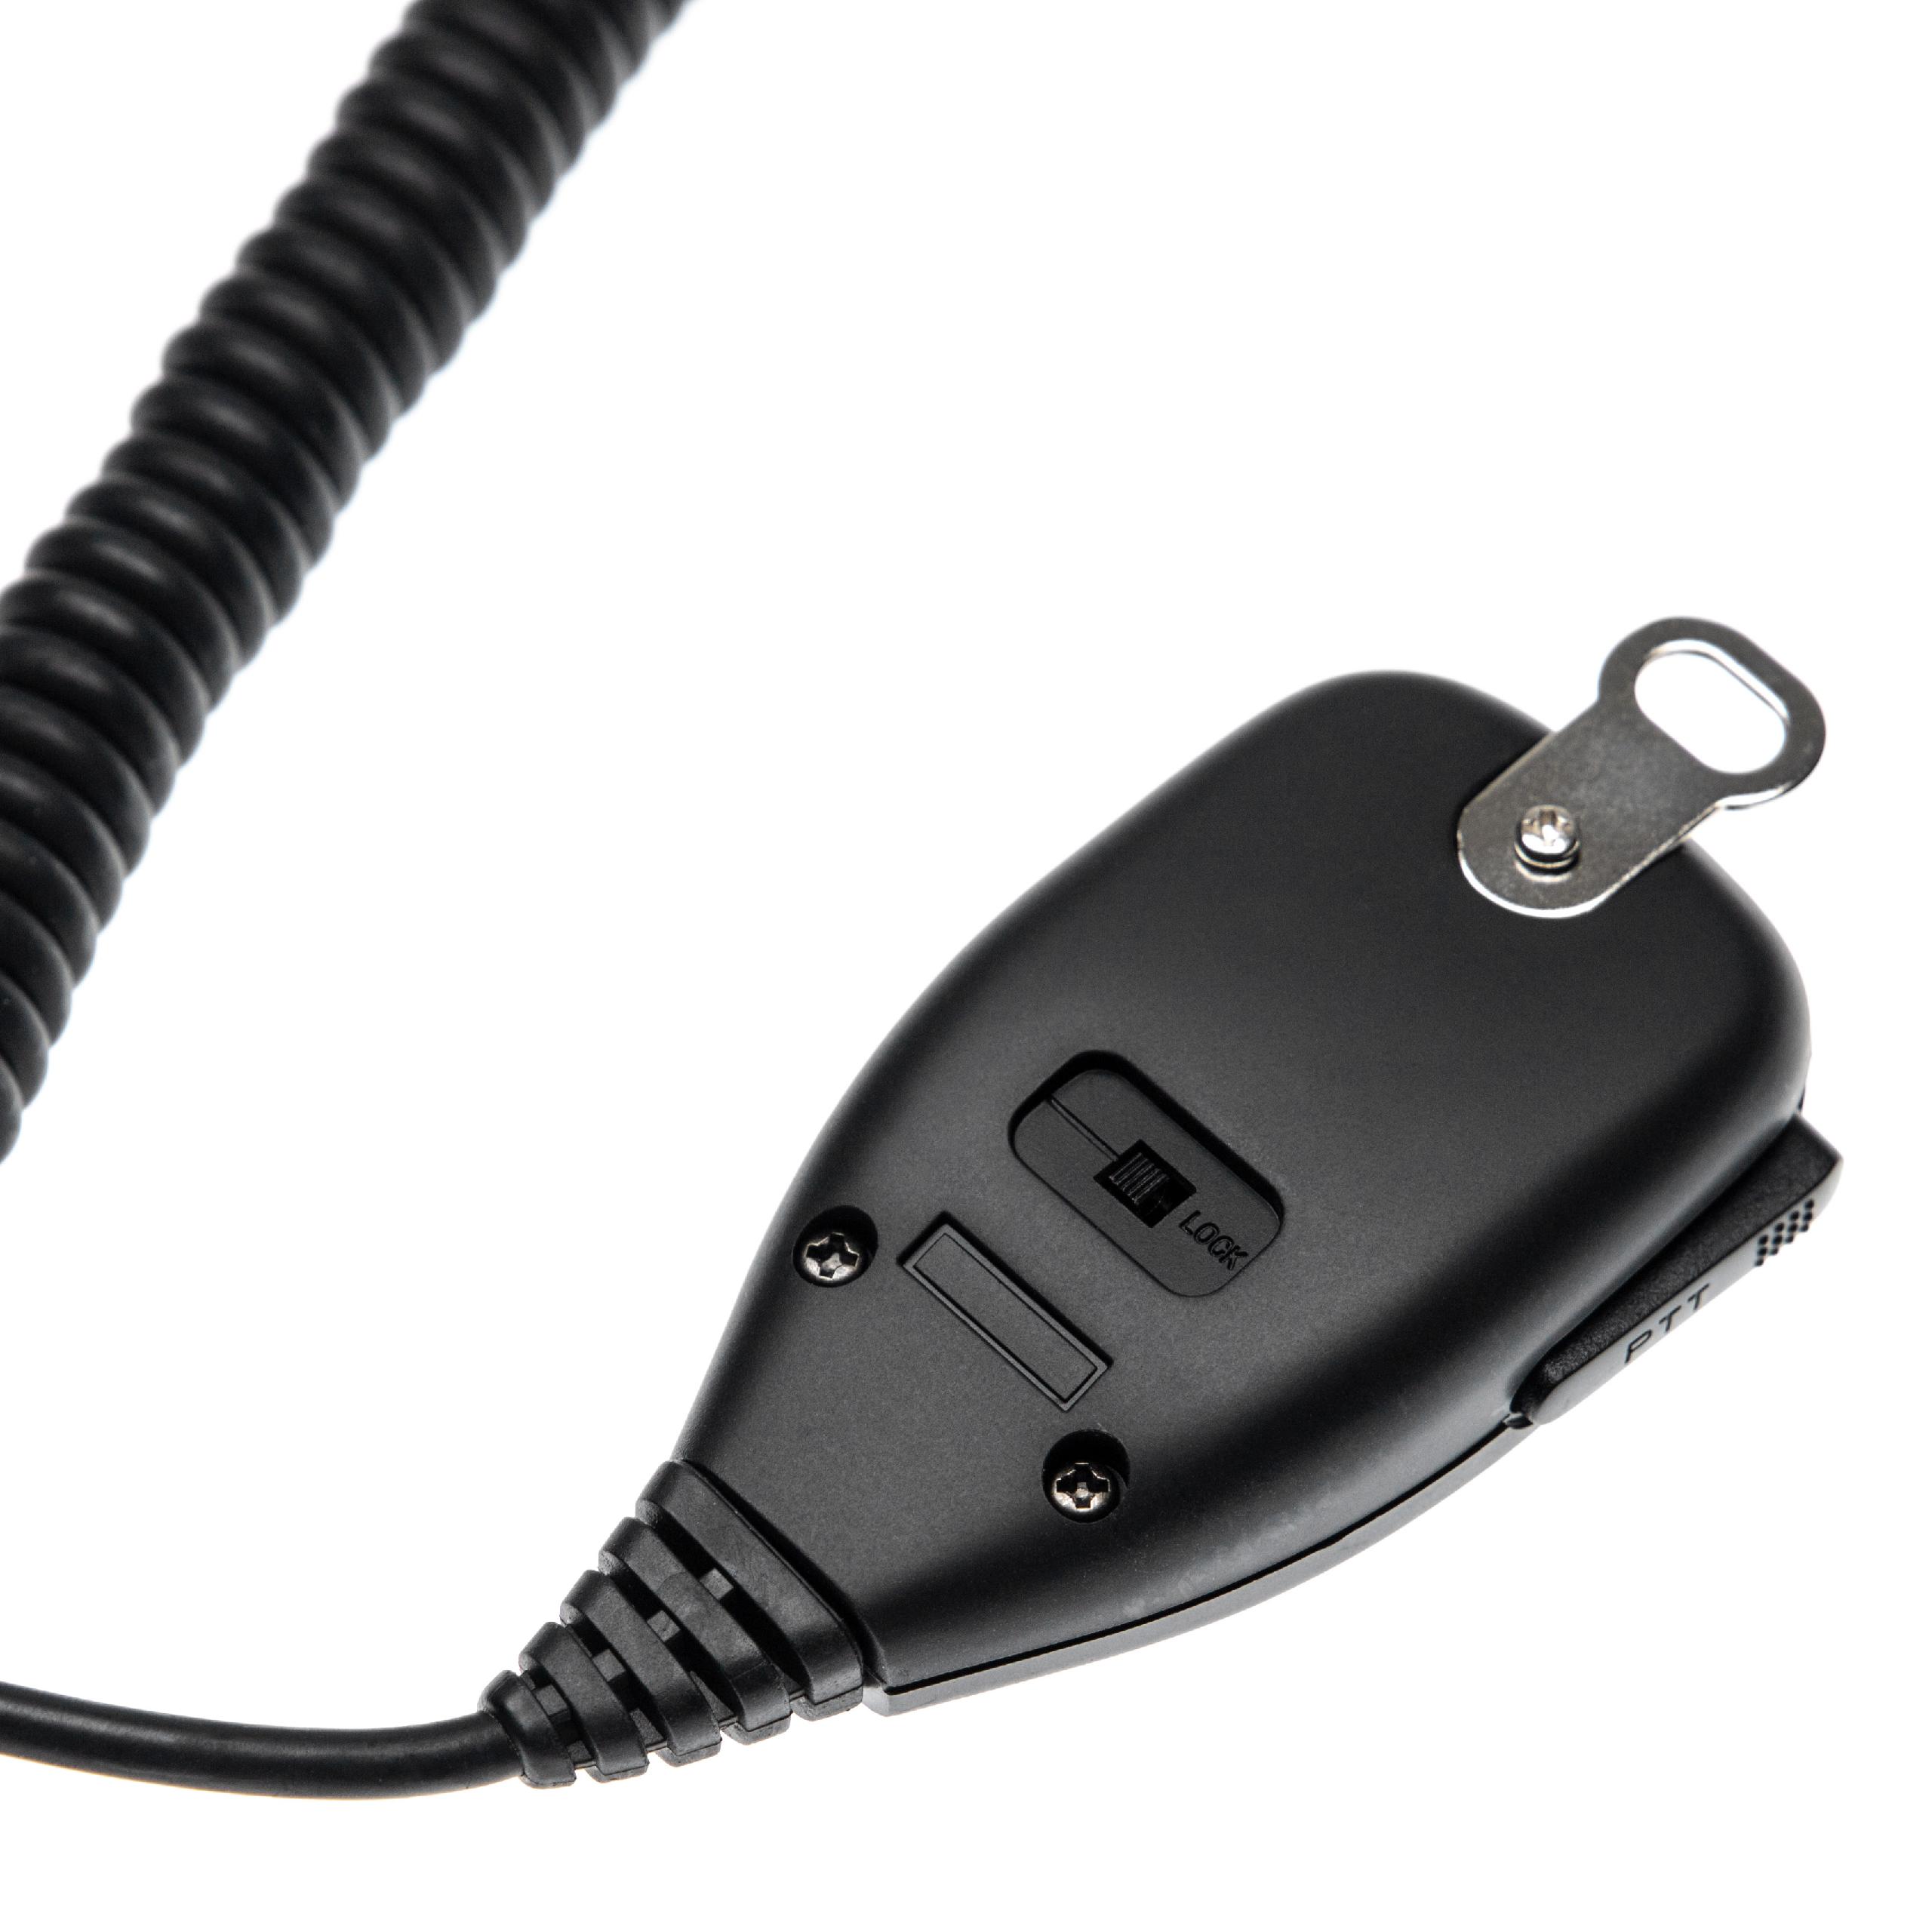 vhbw Microphone haut-parleur compatible avec TK-7100 Kenwood radio